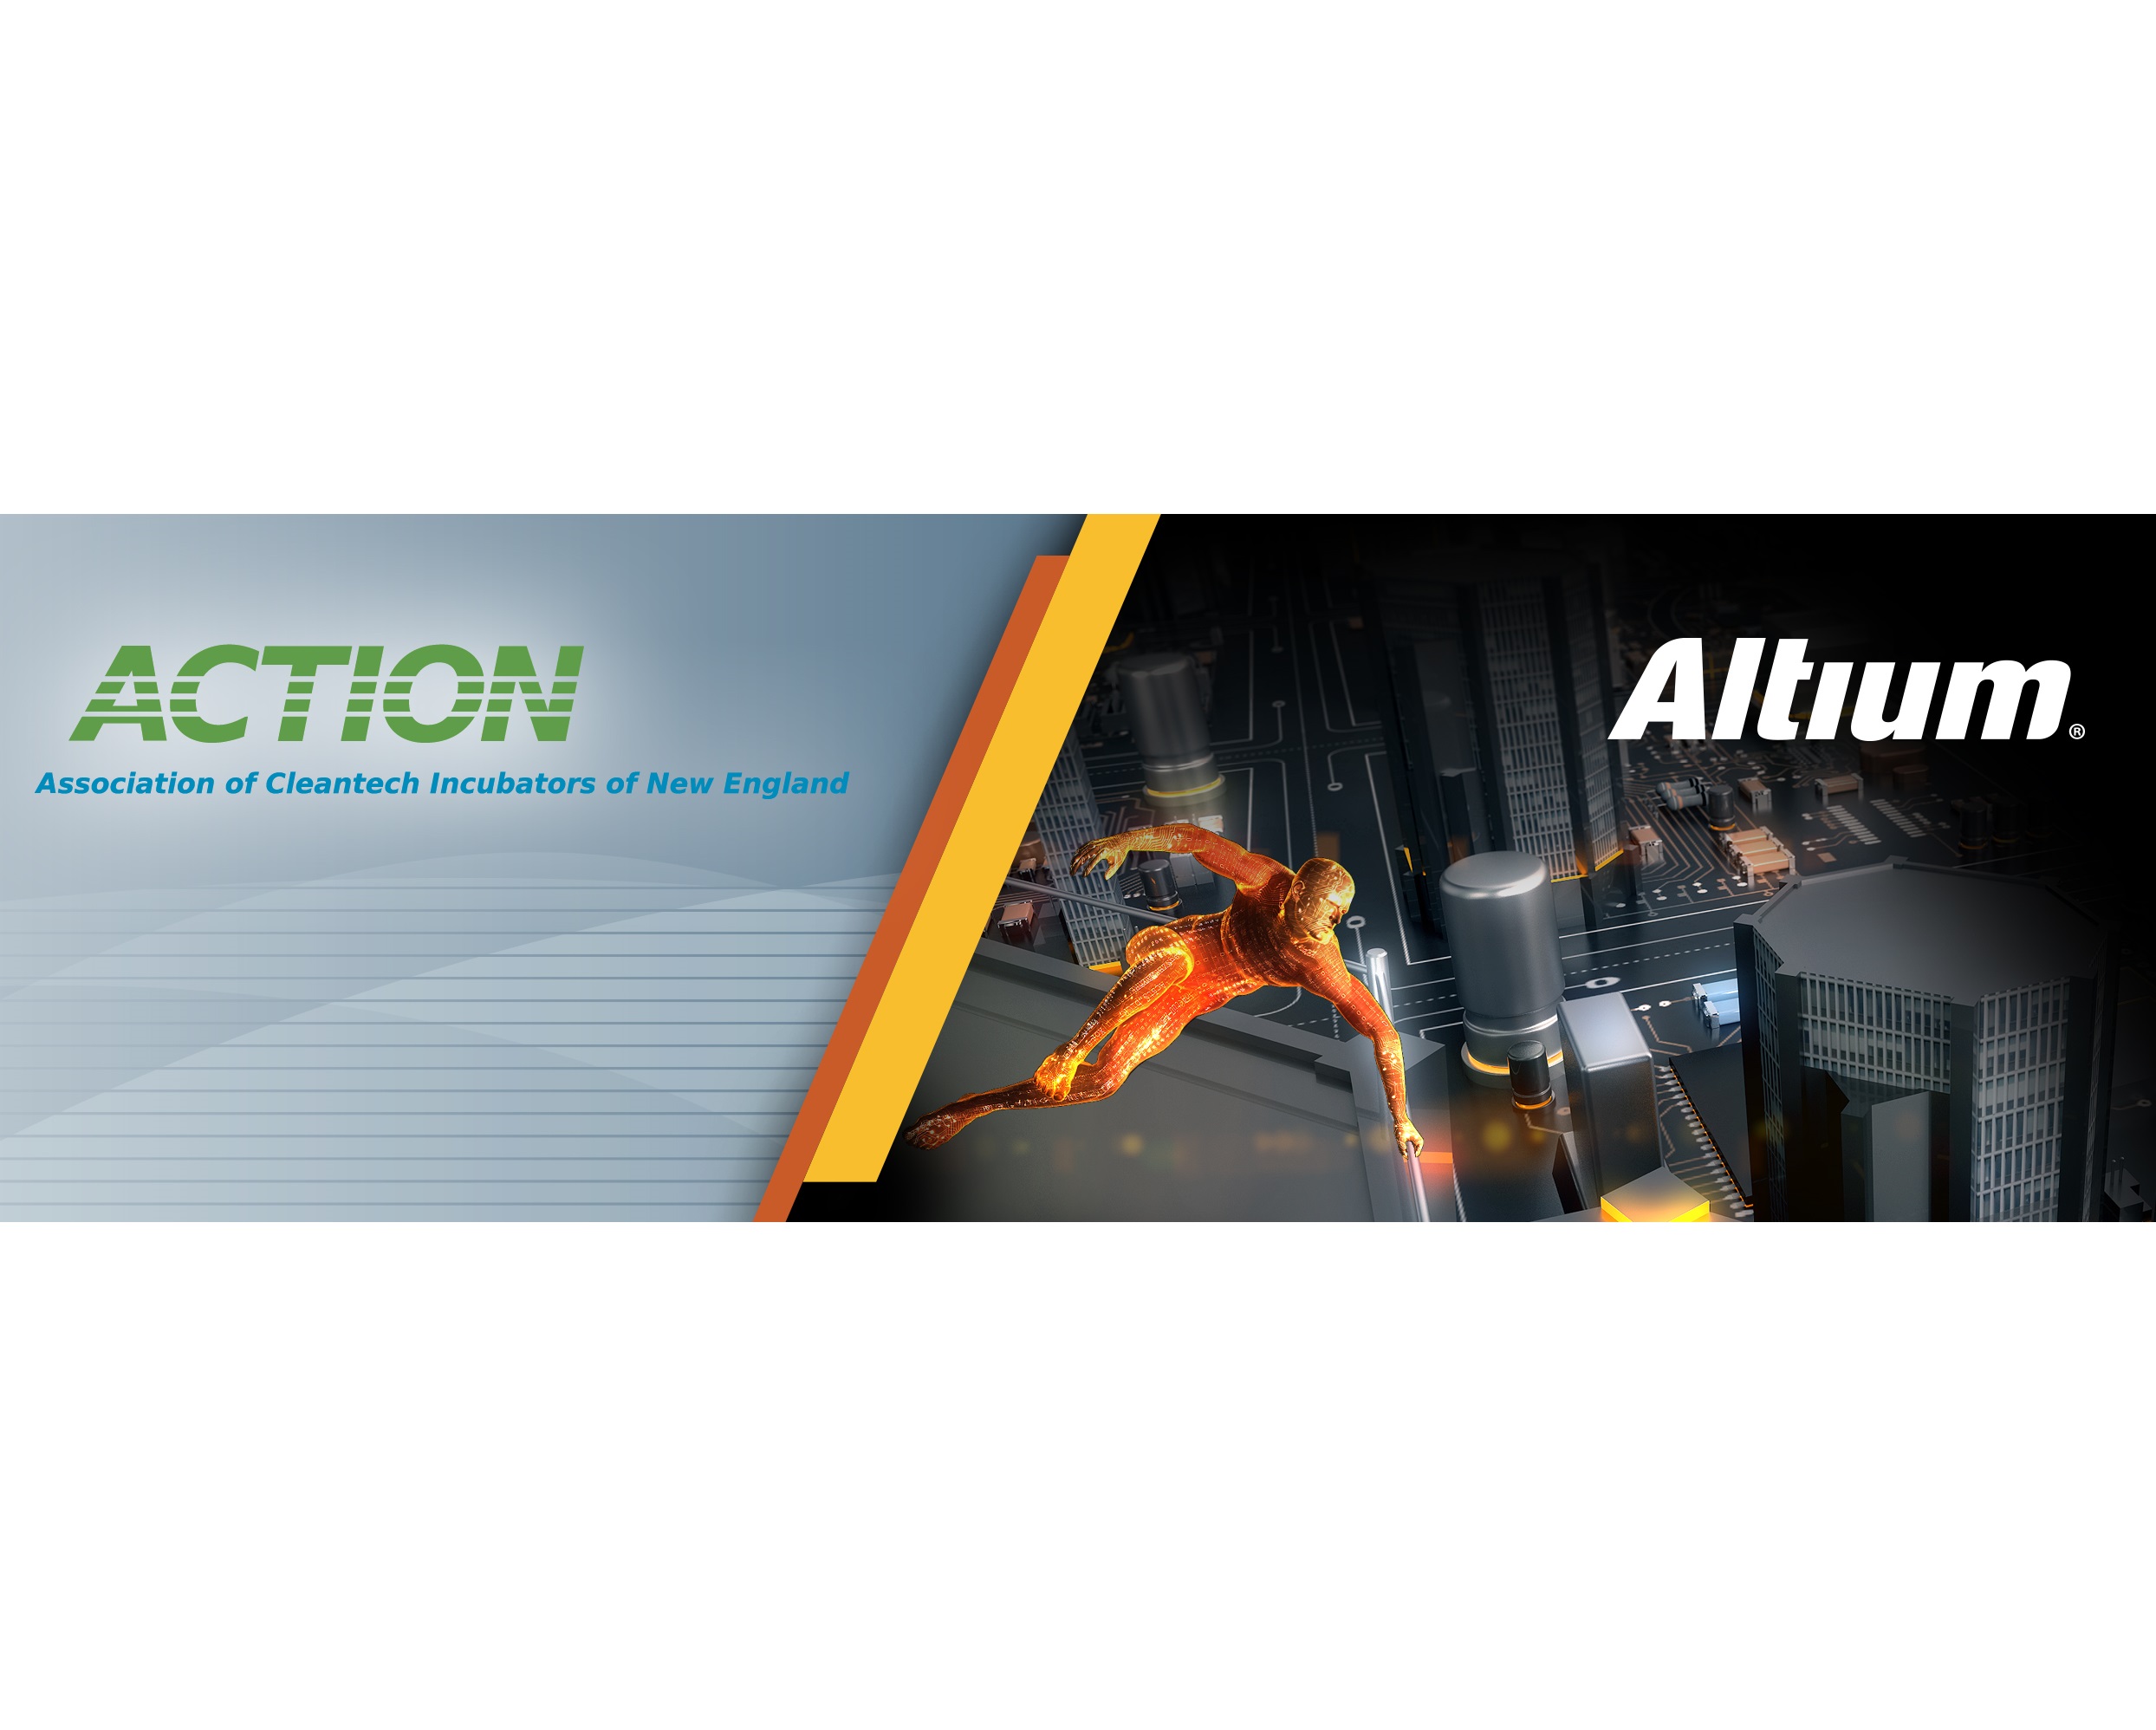 Downloadable Image for Altium Sponsorship for ACTION